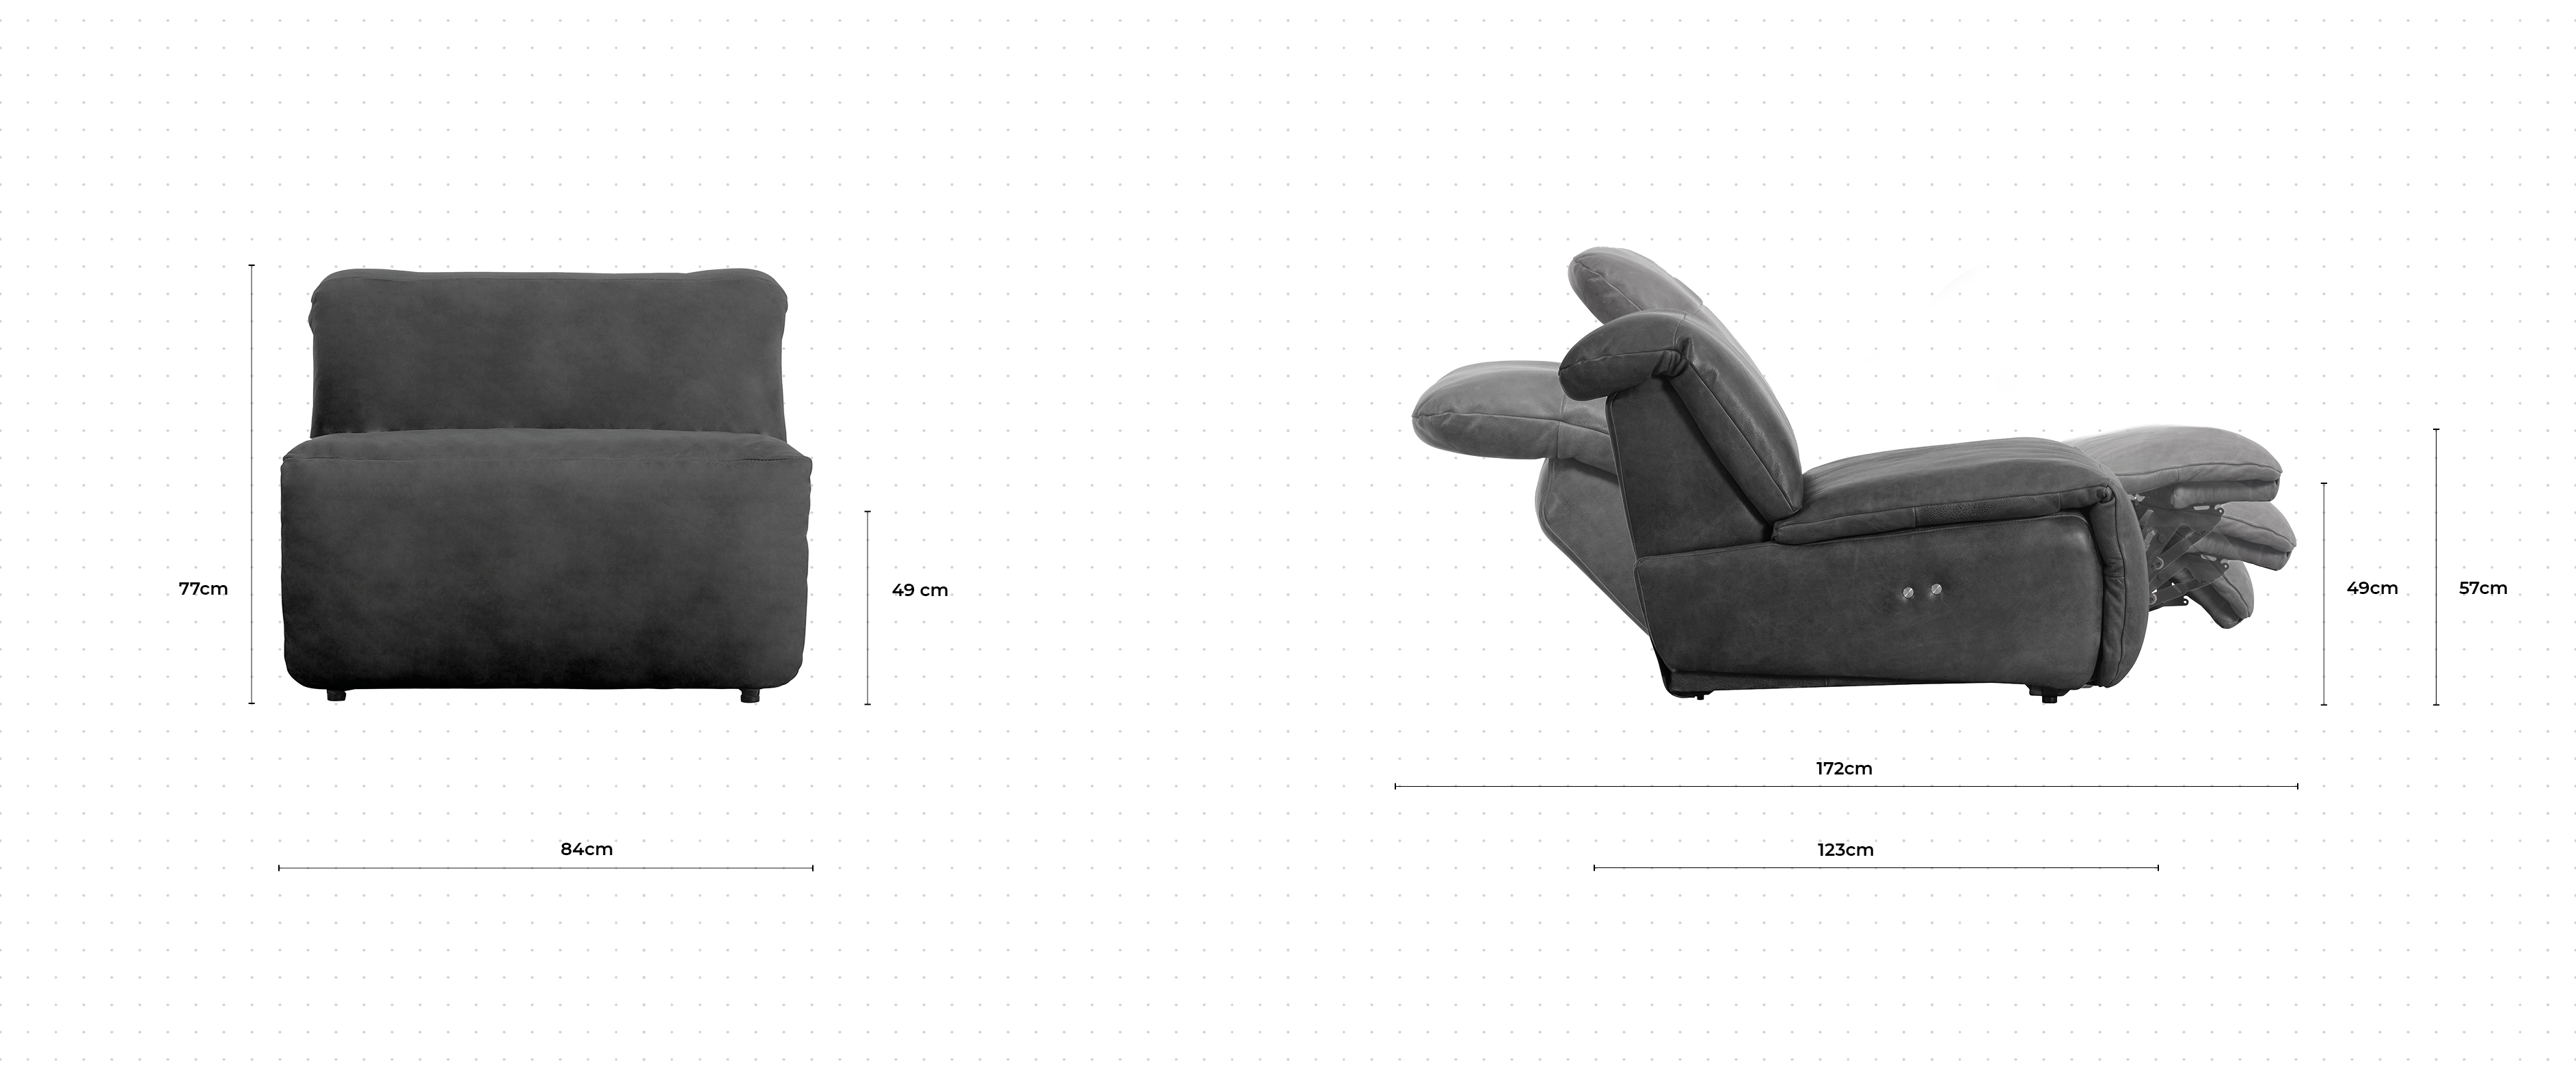 Howard Chair dimensions